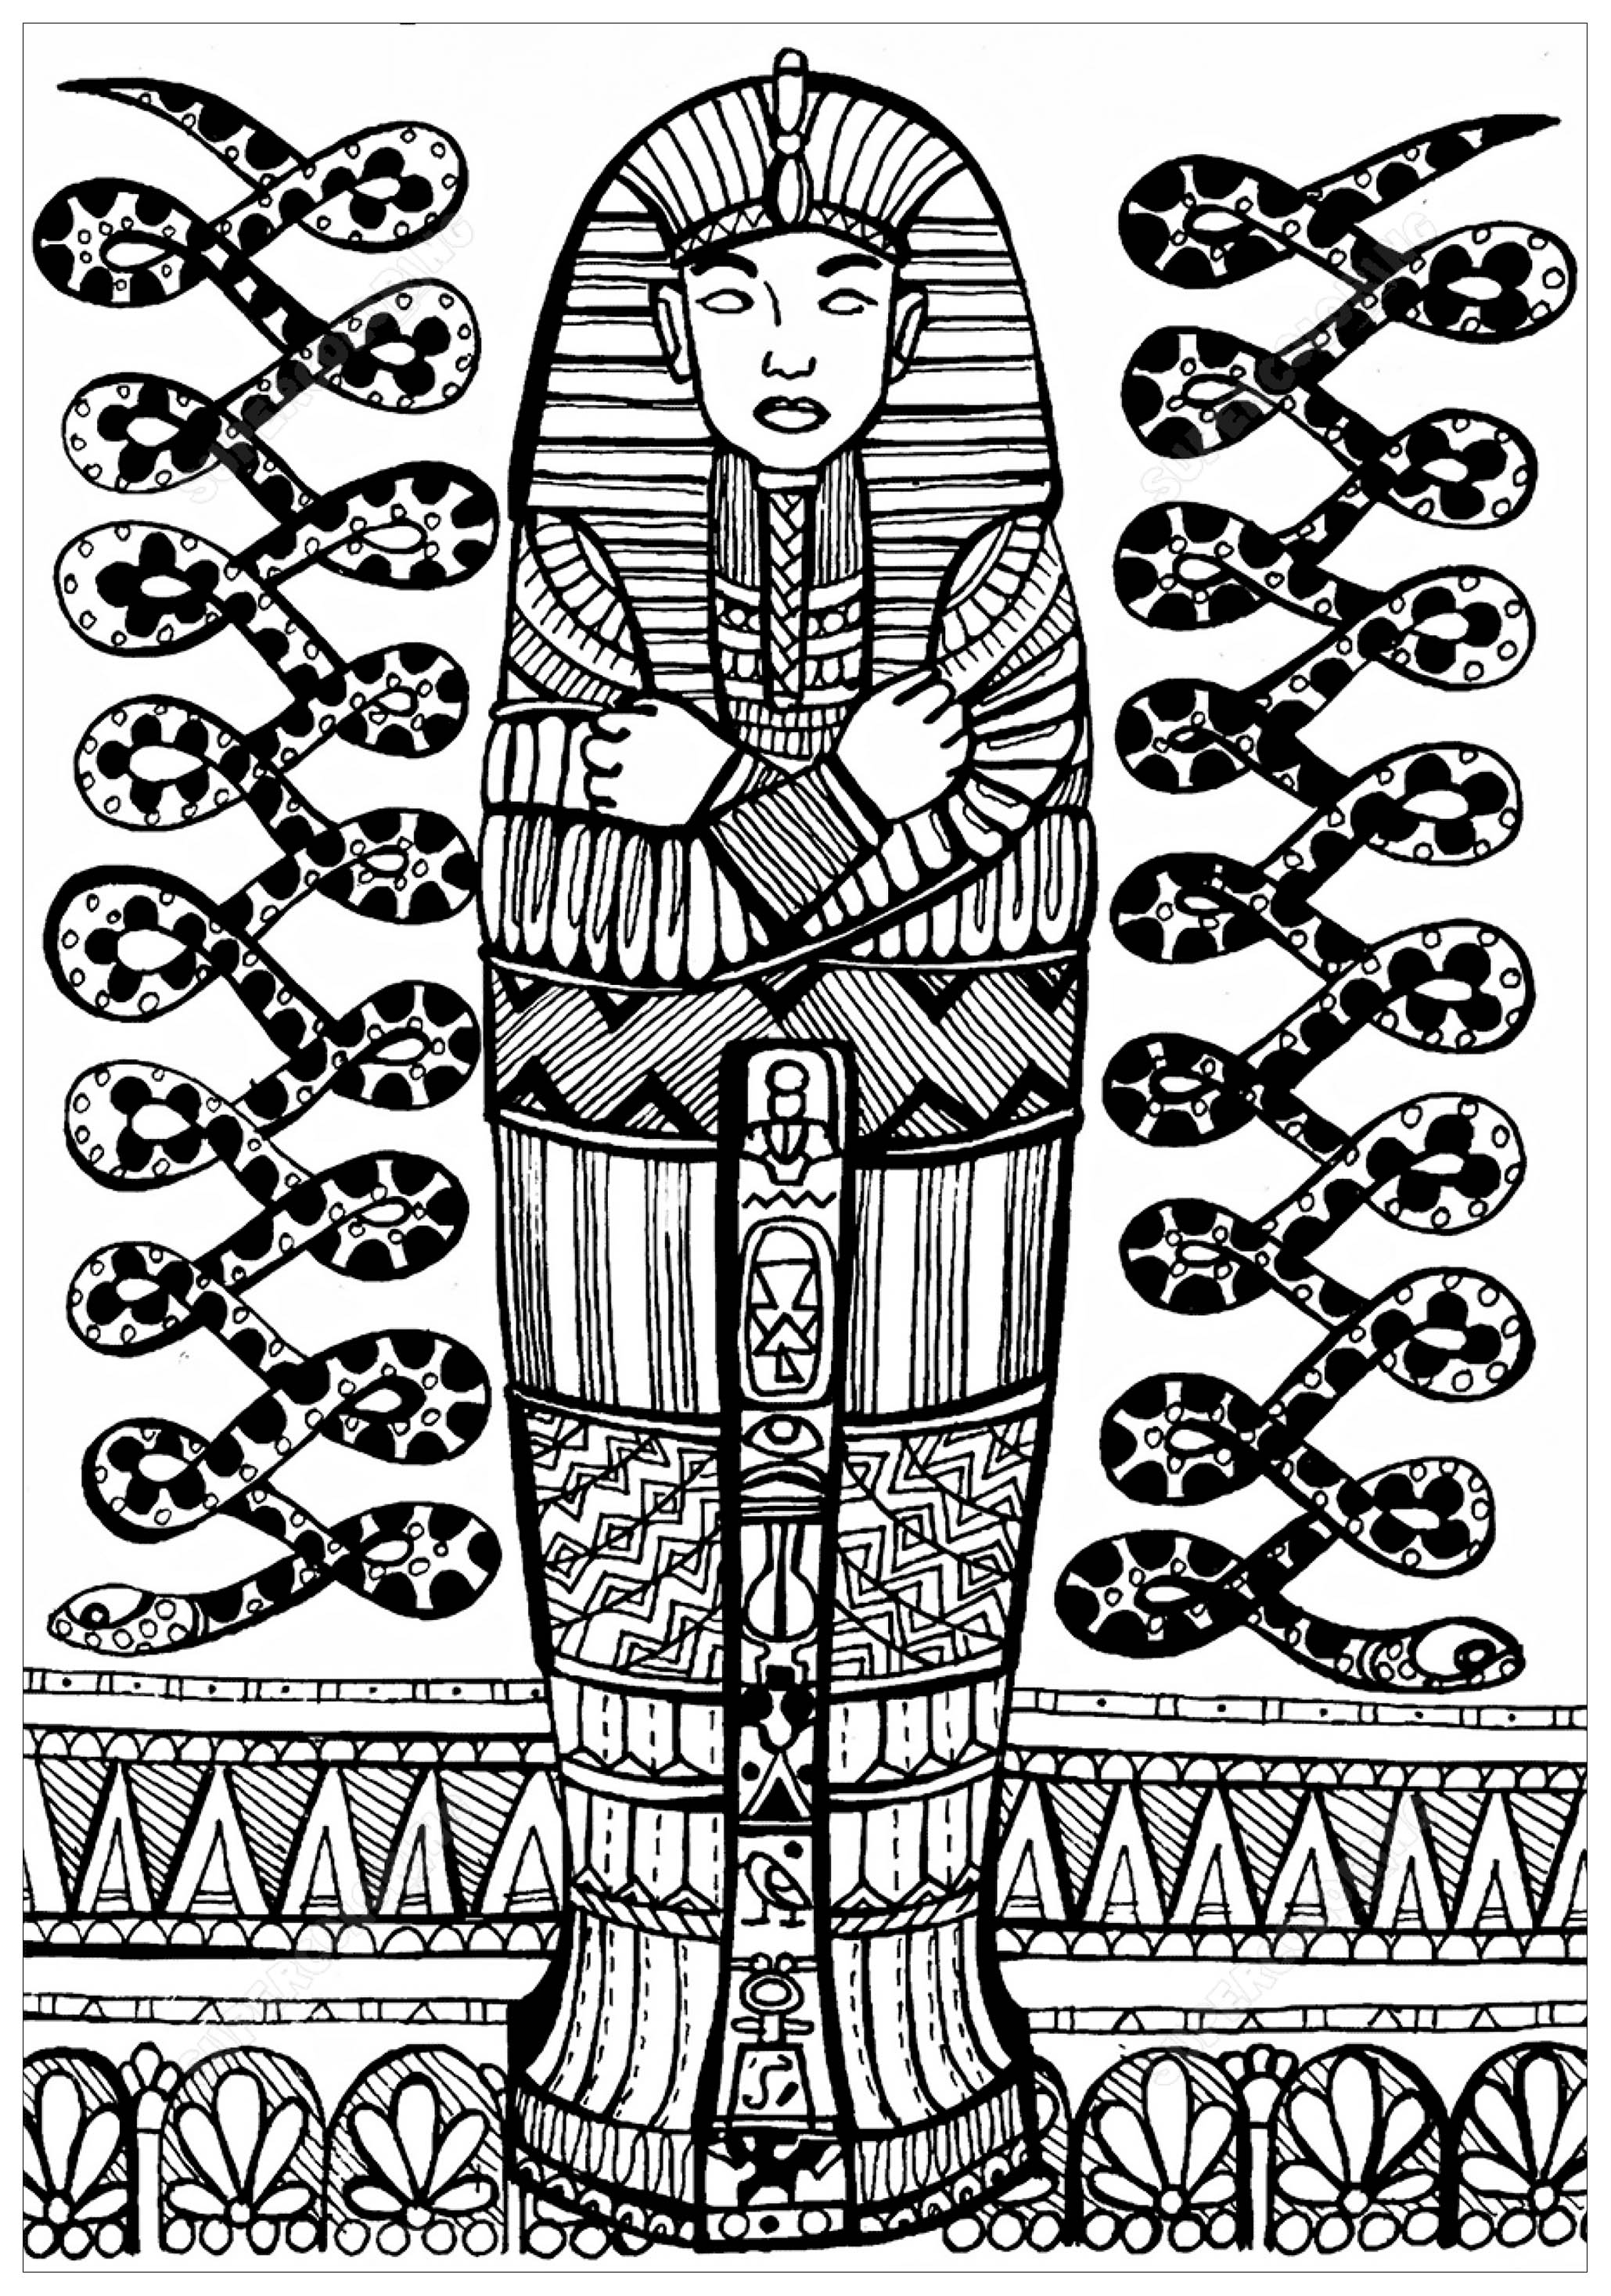 Sarcophage de Pharaon avec serpents et autres motifs, Artiste : Krivosheeva Olga (Ori Akuma)   Source : Supercoloring